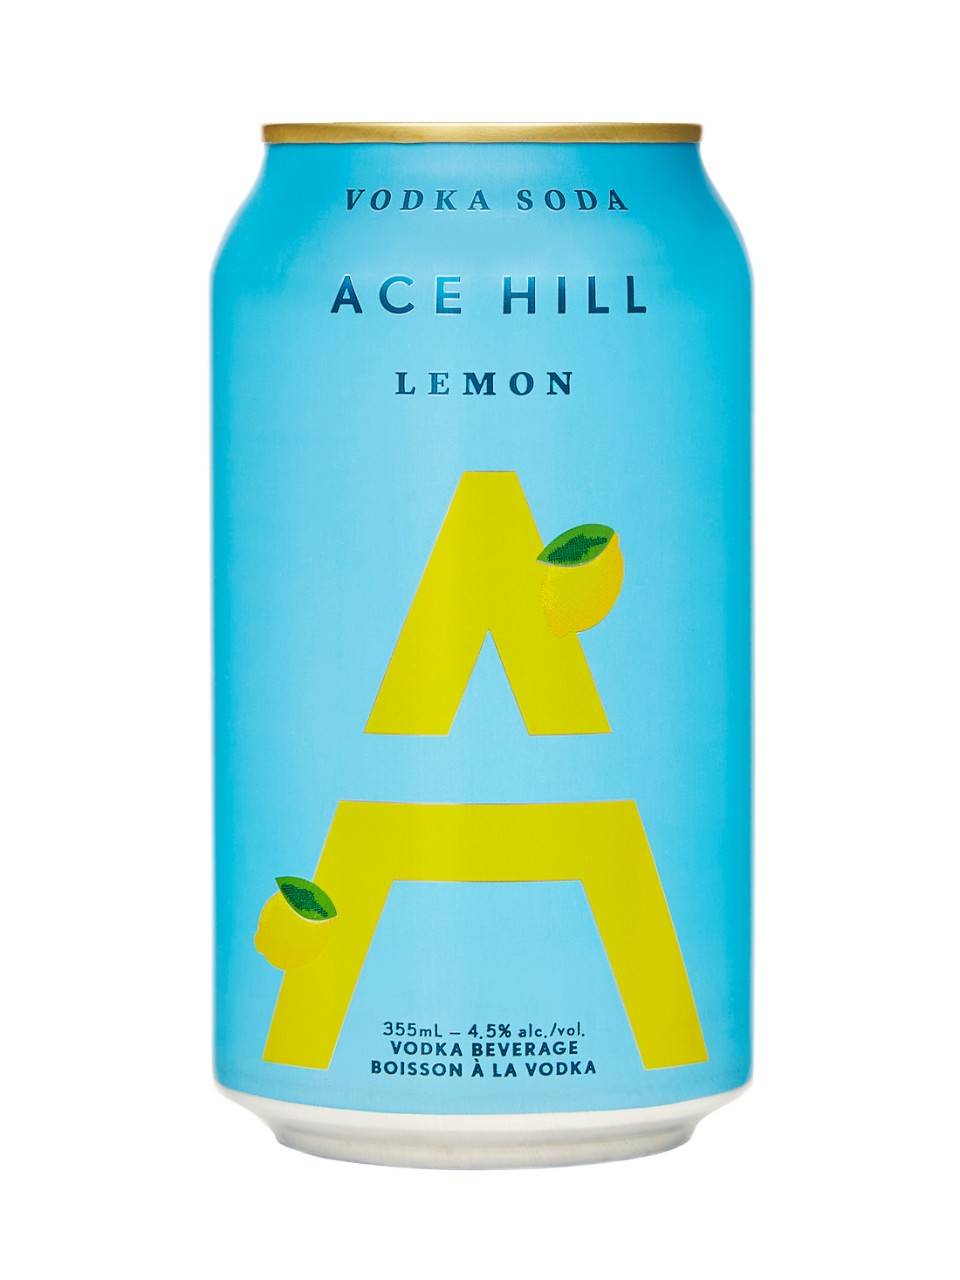 Ace Hill Lemon Vodka Soda (355 ml)